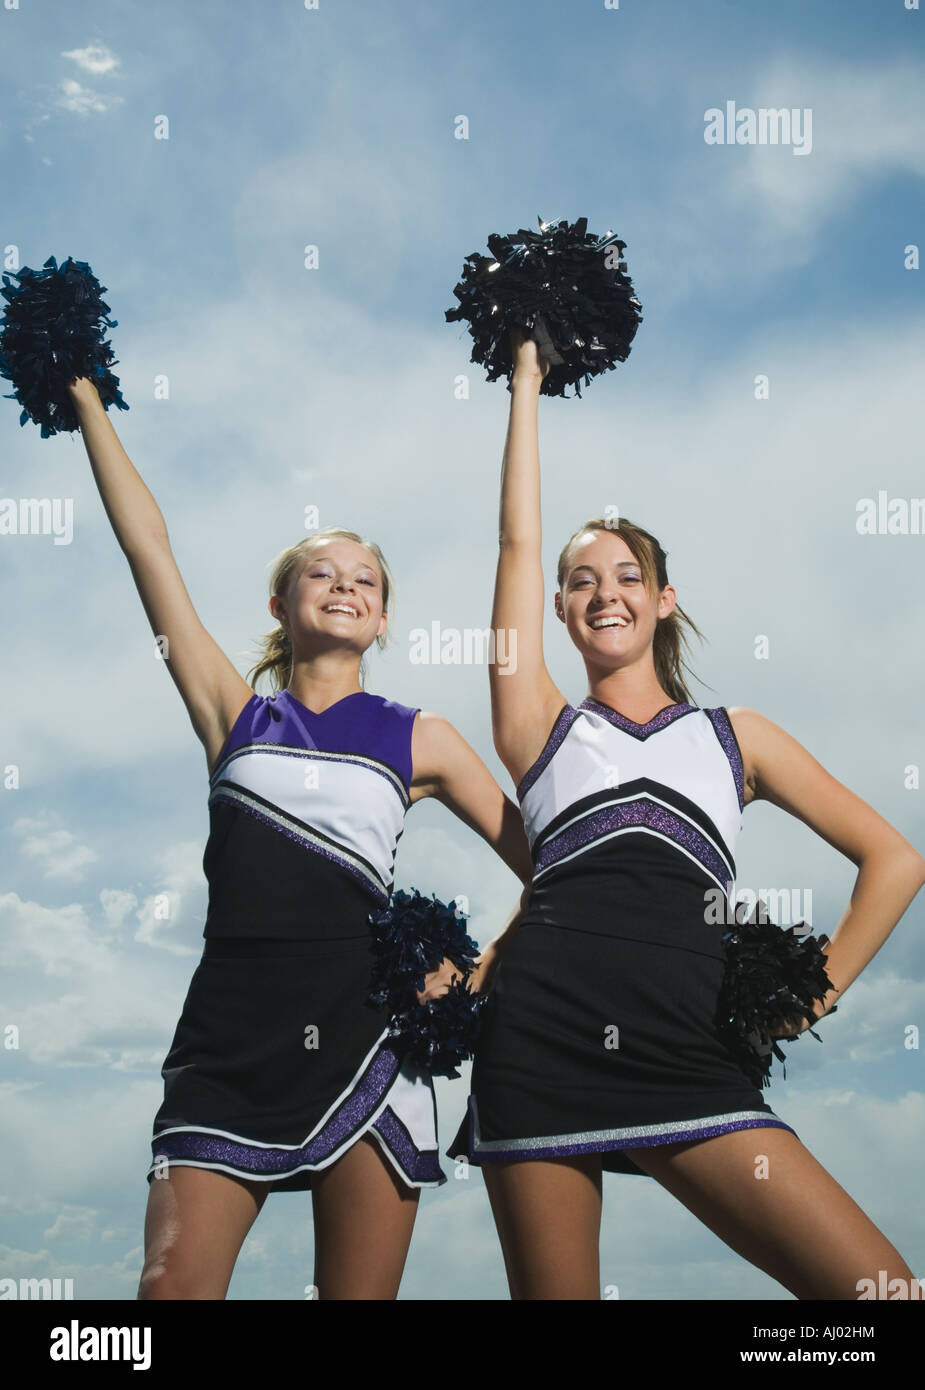 Two cheerleaders holding pom poms Stock Photo